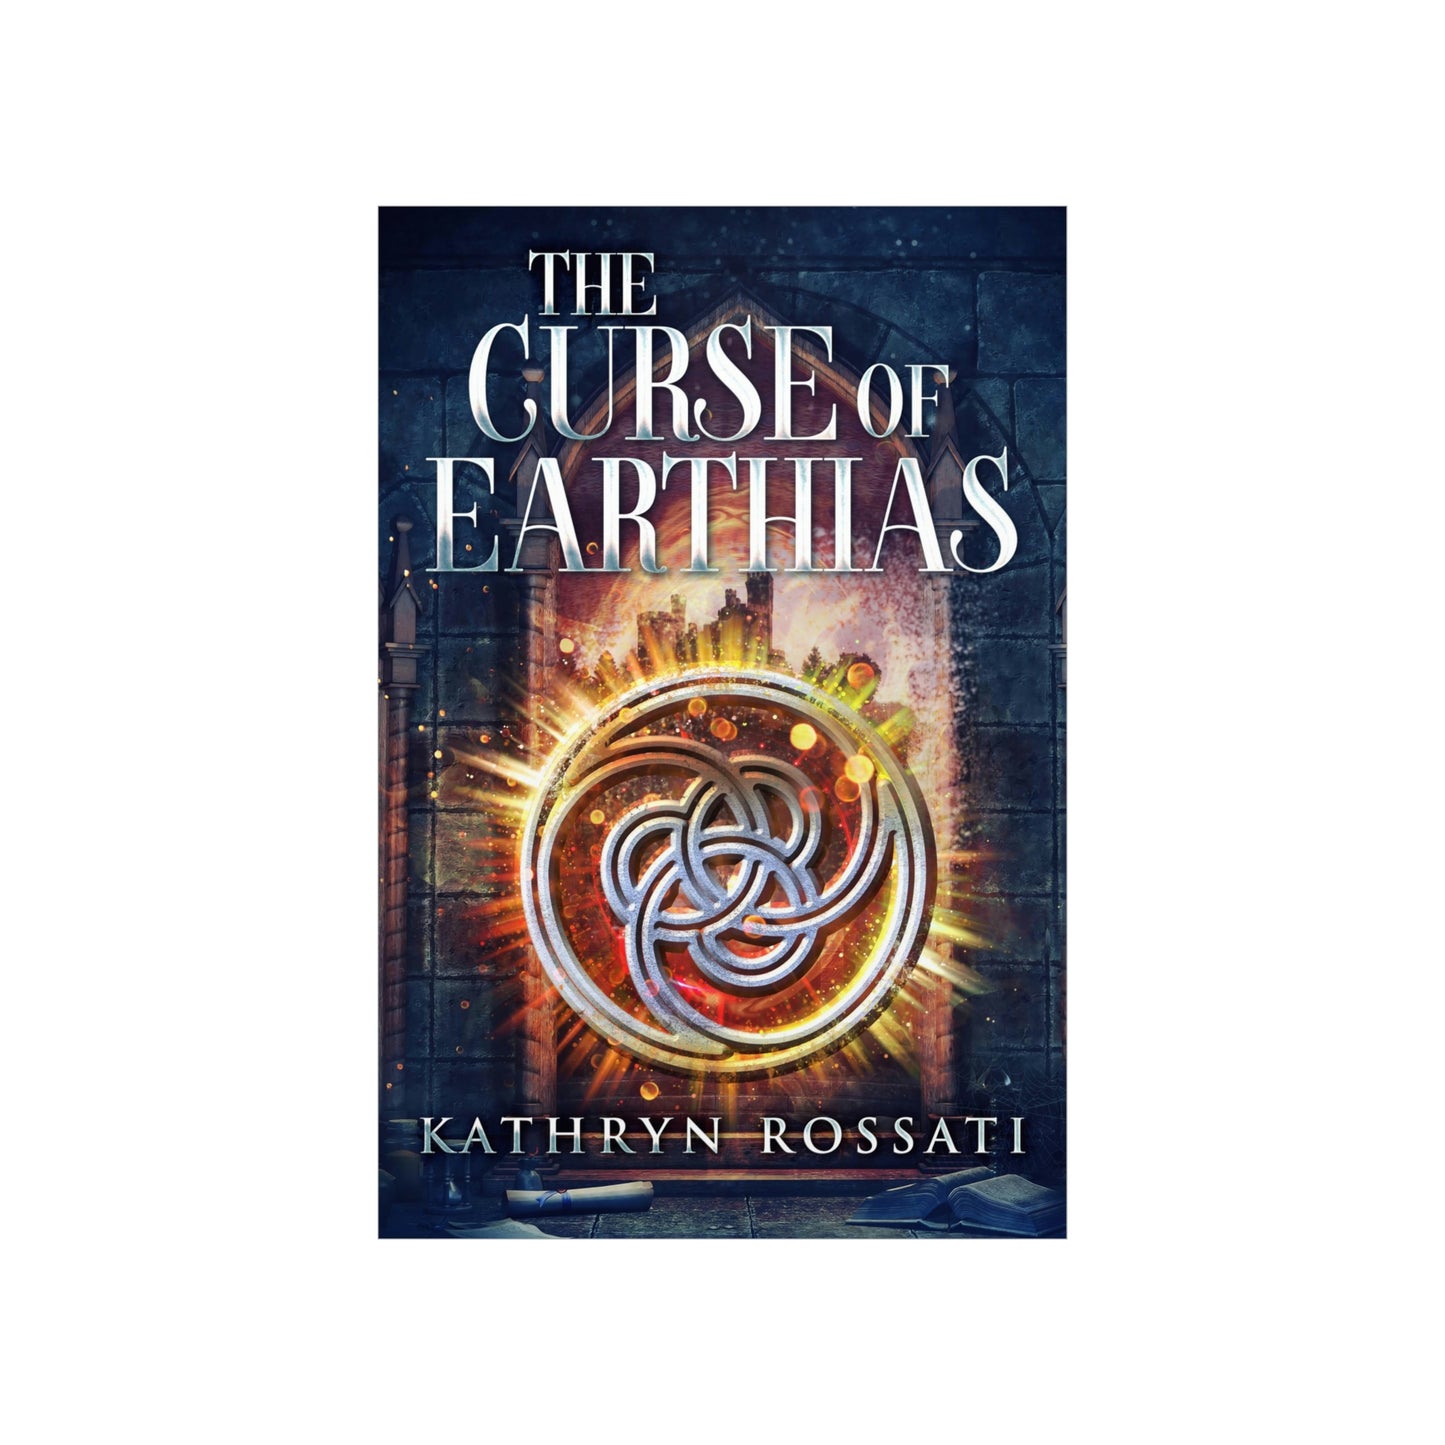 The Curse Of Earthias - Matte Poster